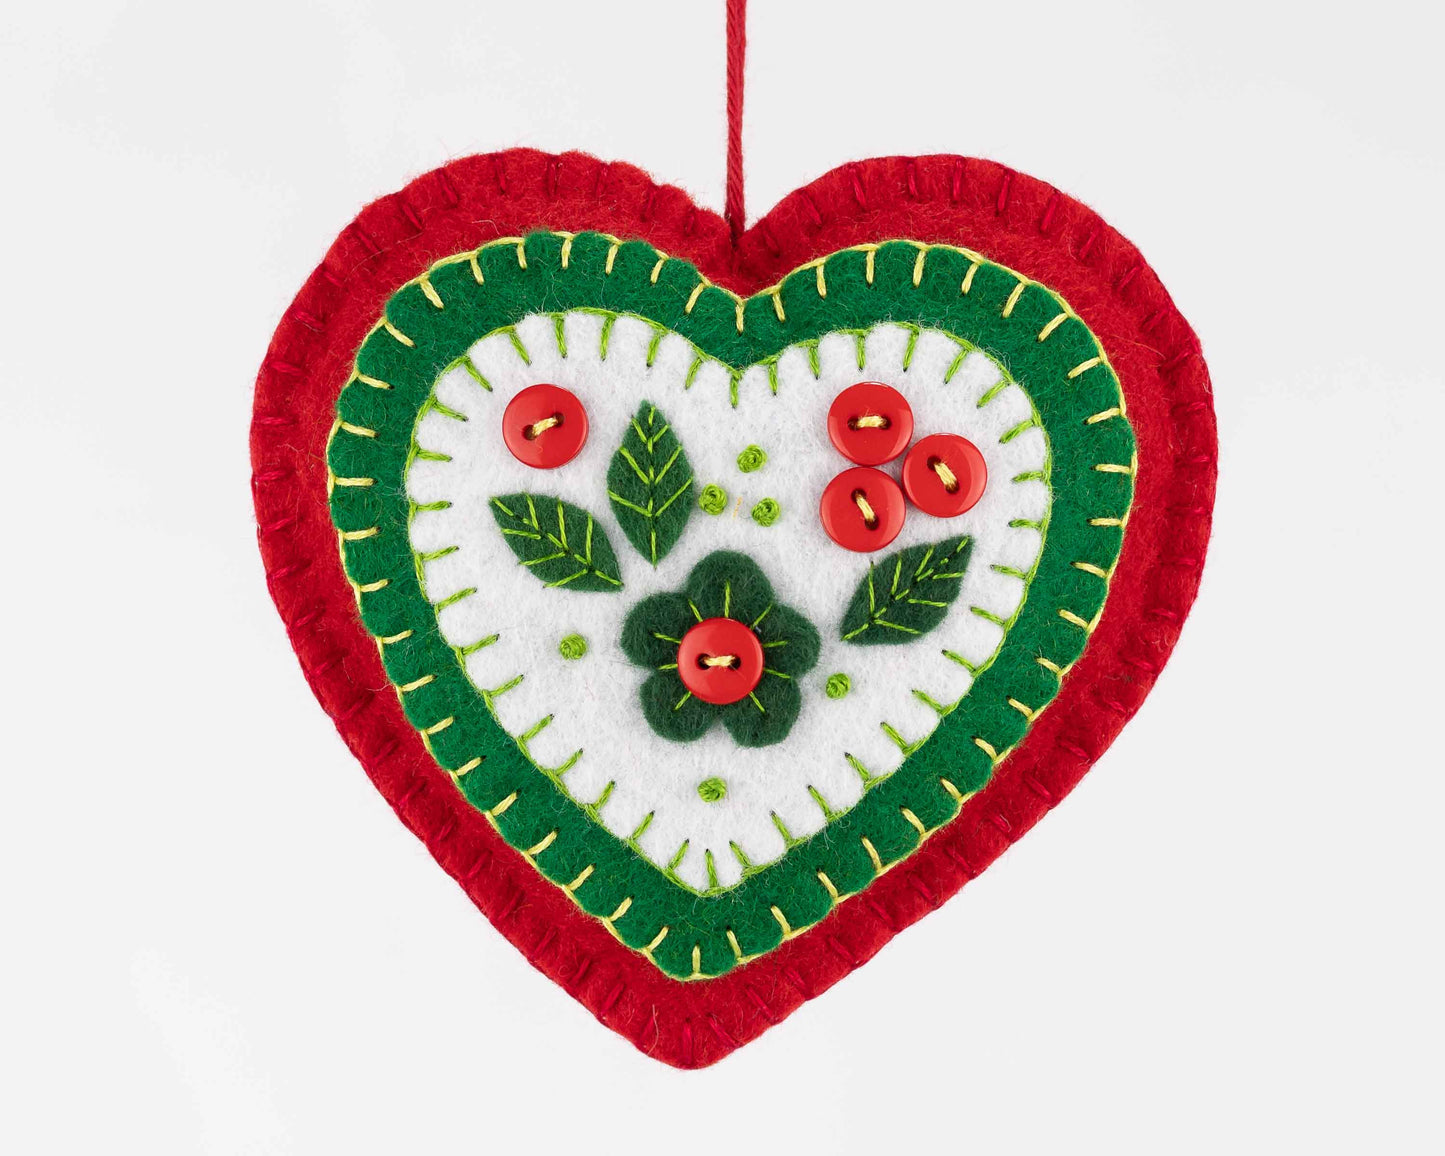 Felt heart Christmas ornament sewing kit